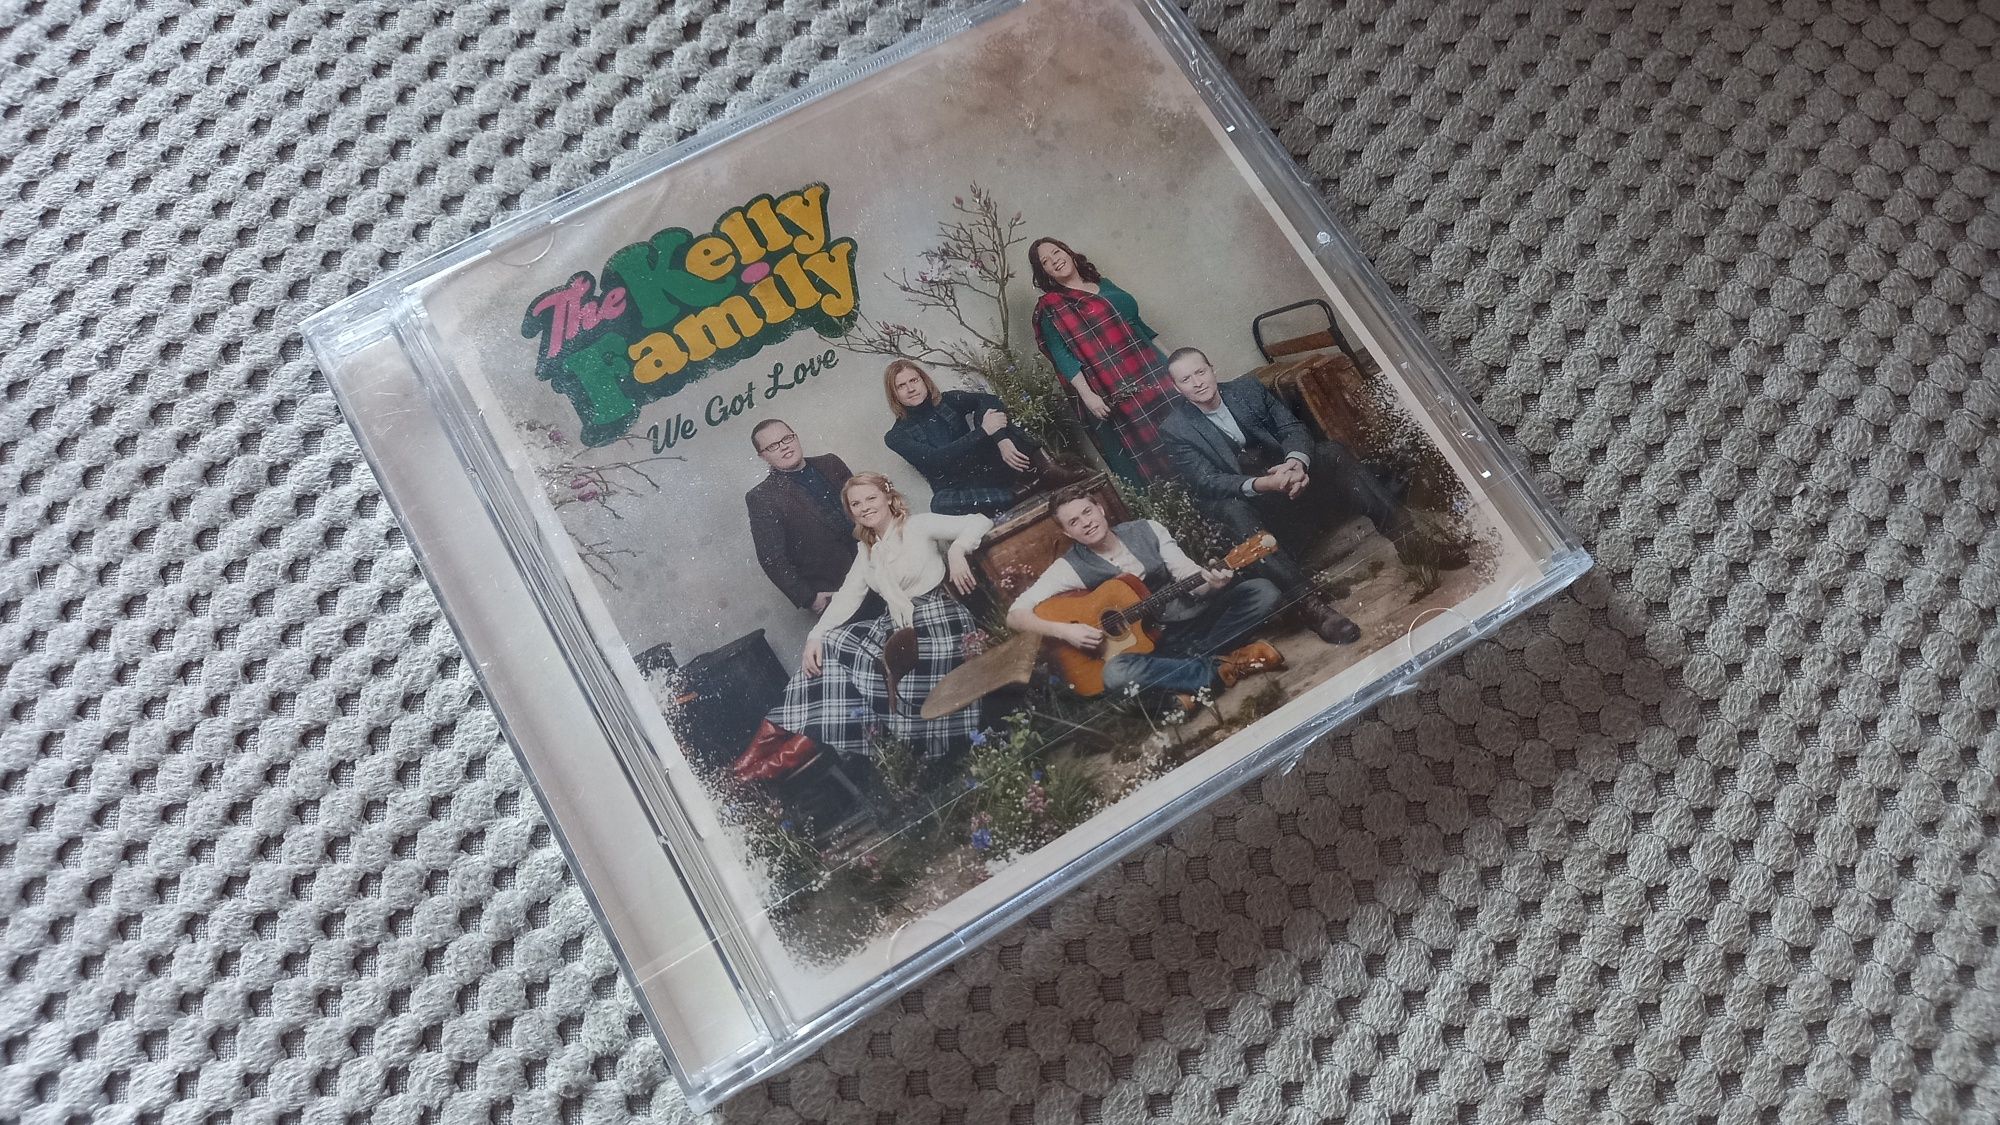 The Kelly familij cd